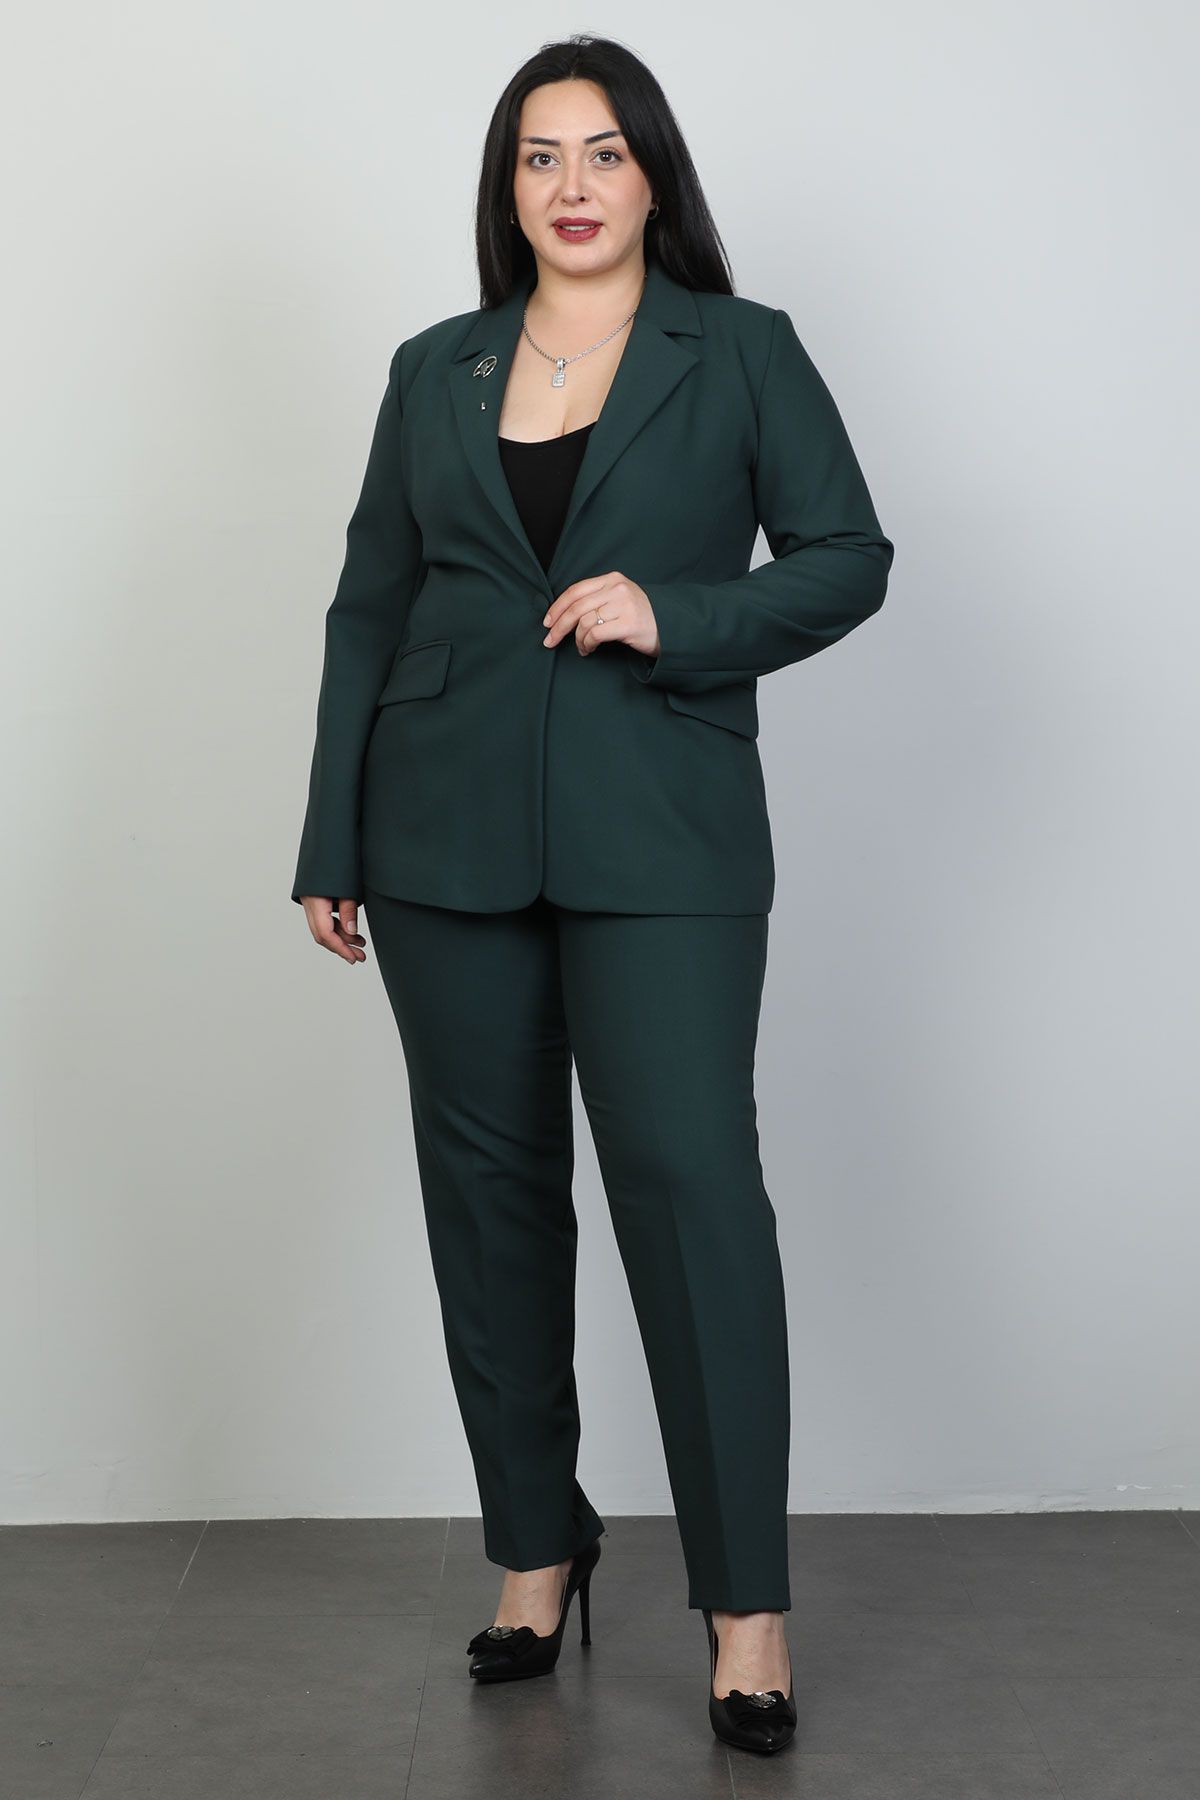 Xewn 4861xl DARK GREEN Plus Size Women Suit